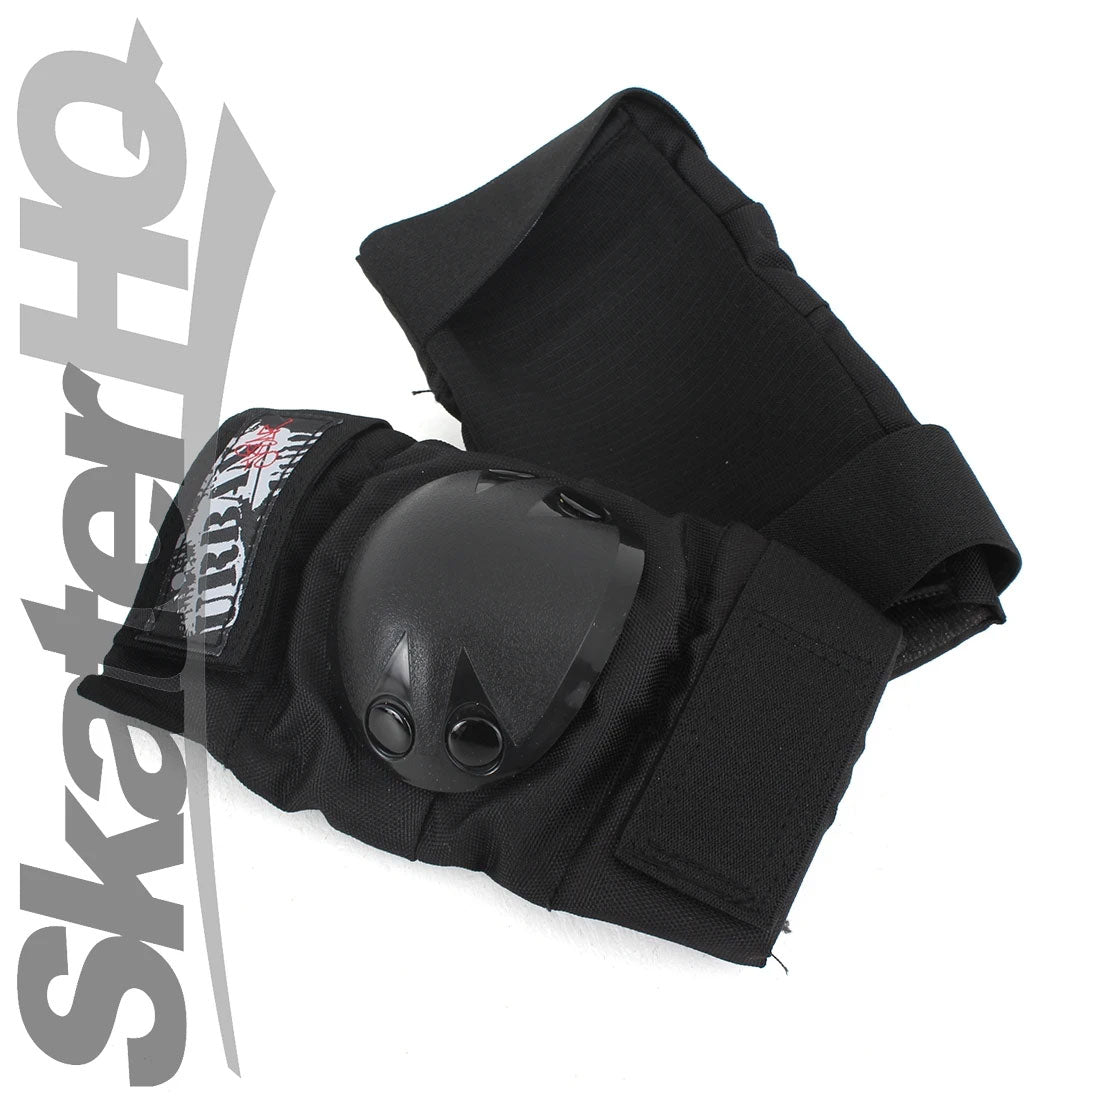 Urban Skater Knee/Elbow Black - Large Protective Gear